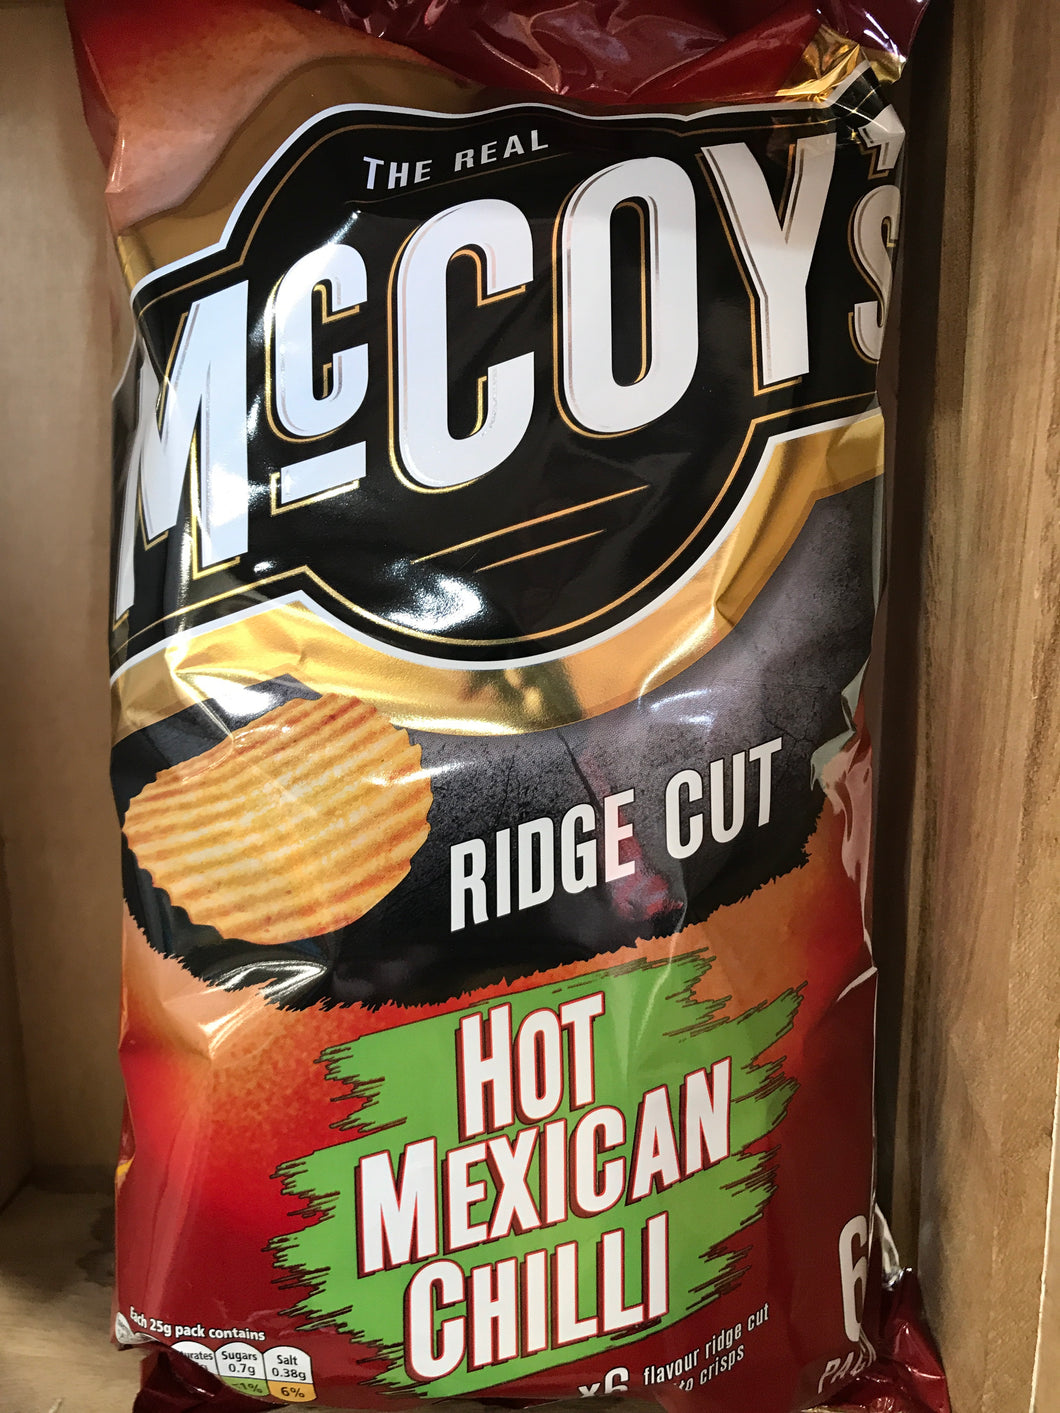 McCoy's Ridge Cut Hot Mexican Chilli 6 Pack (6x25g)